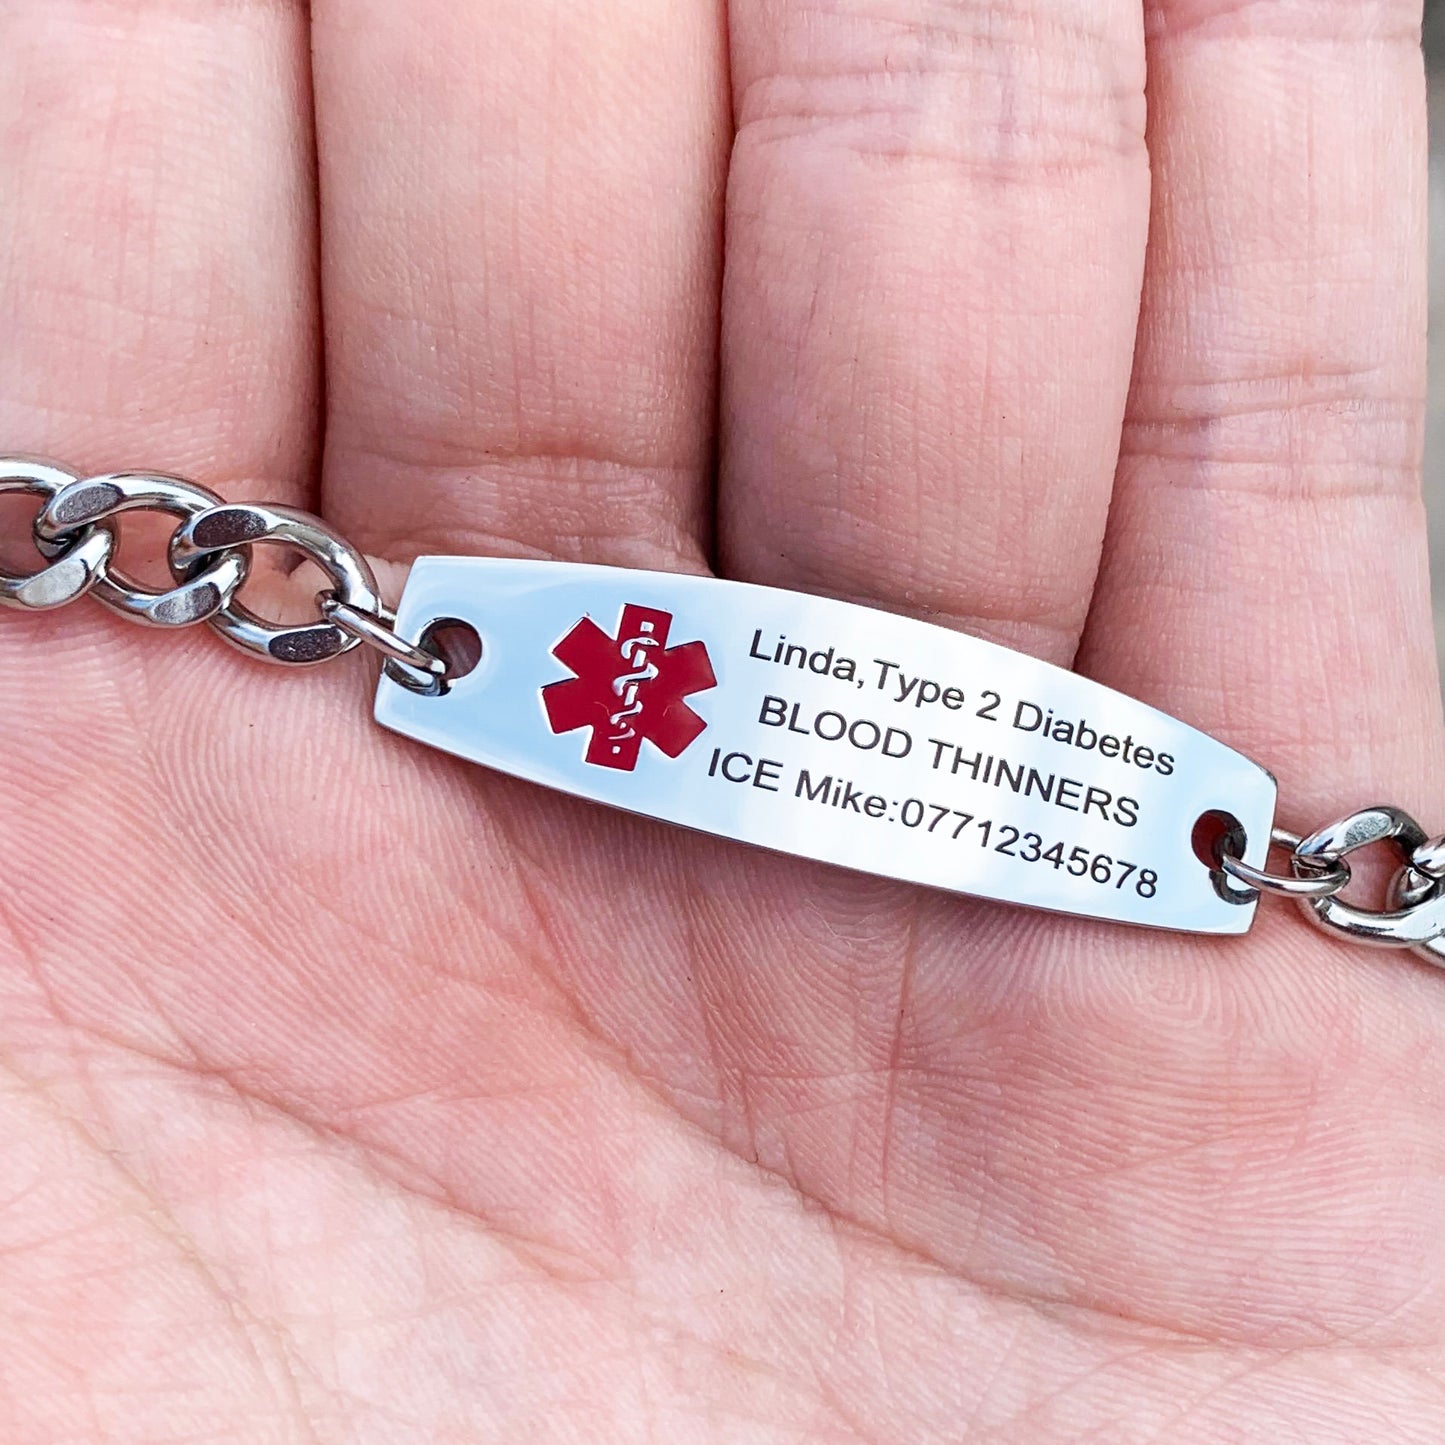 Personalized Medical ID Bracelet